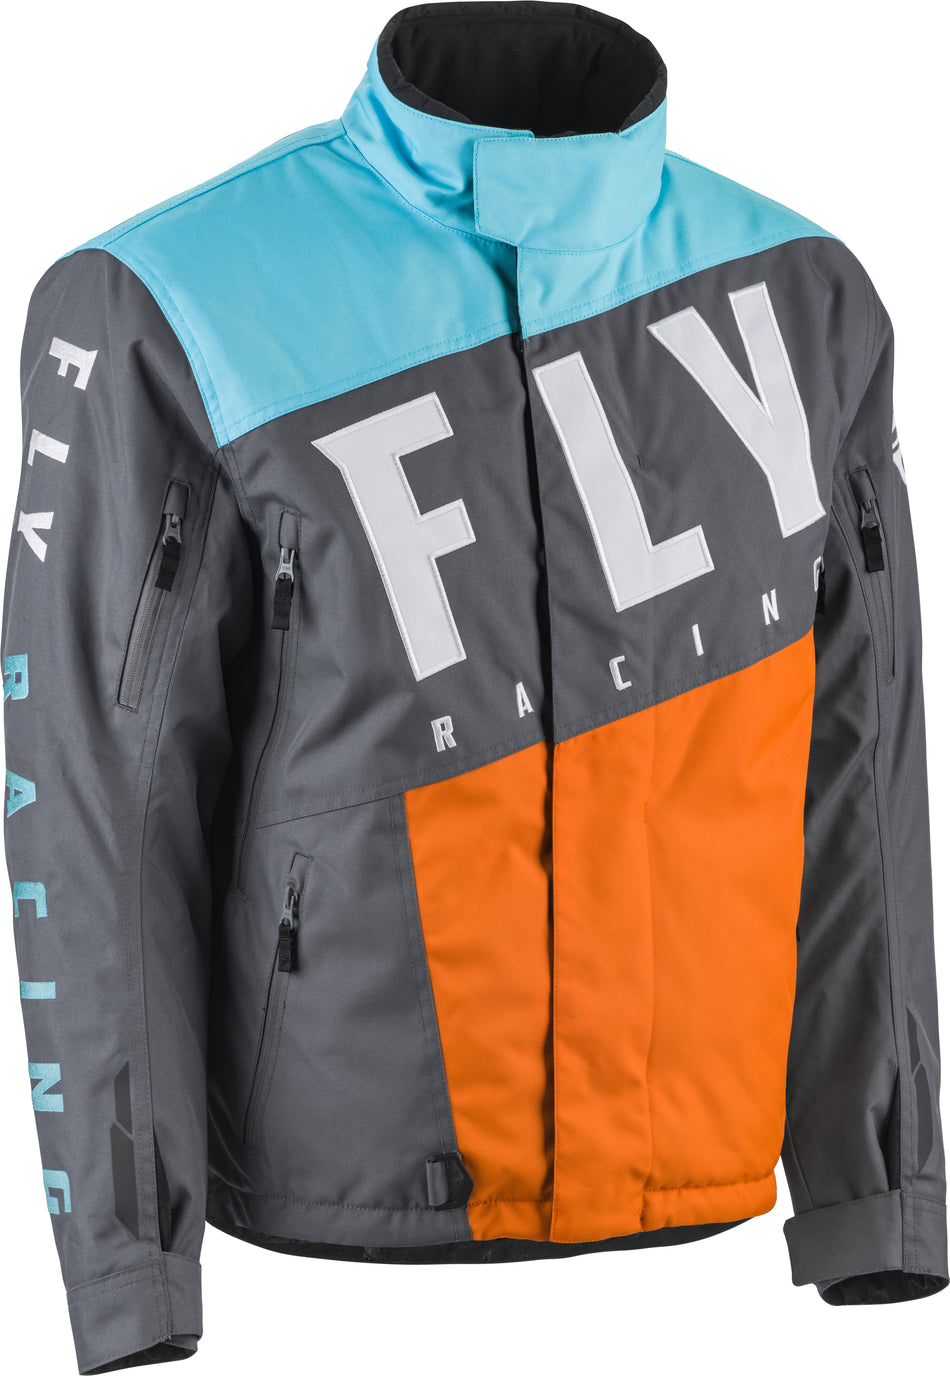 FLY RACING Snx Pro Jacket Orange/Light Blue/Black Lg 470-4114L